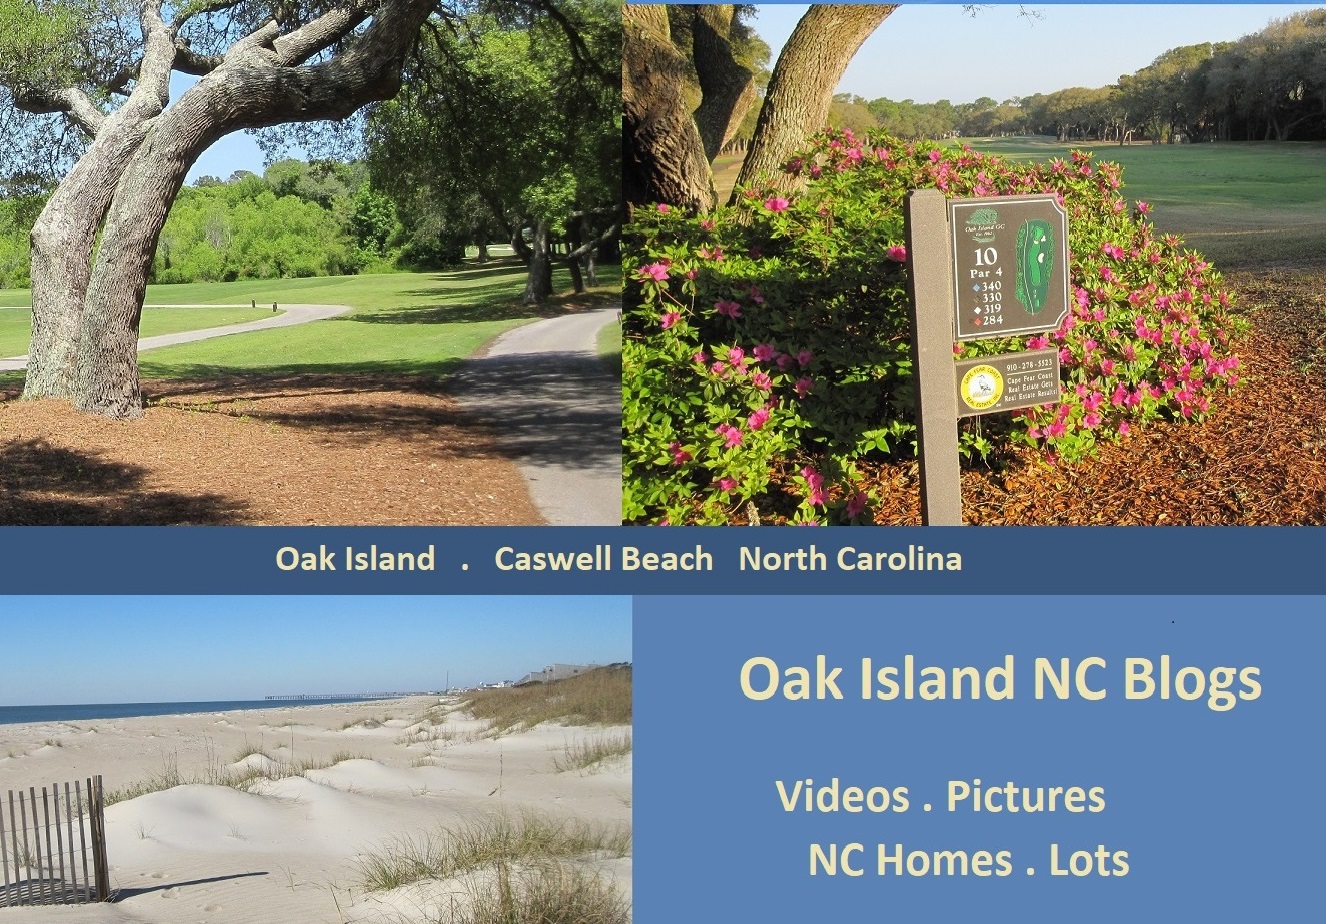 Oak Island NC pictures blogs